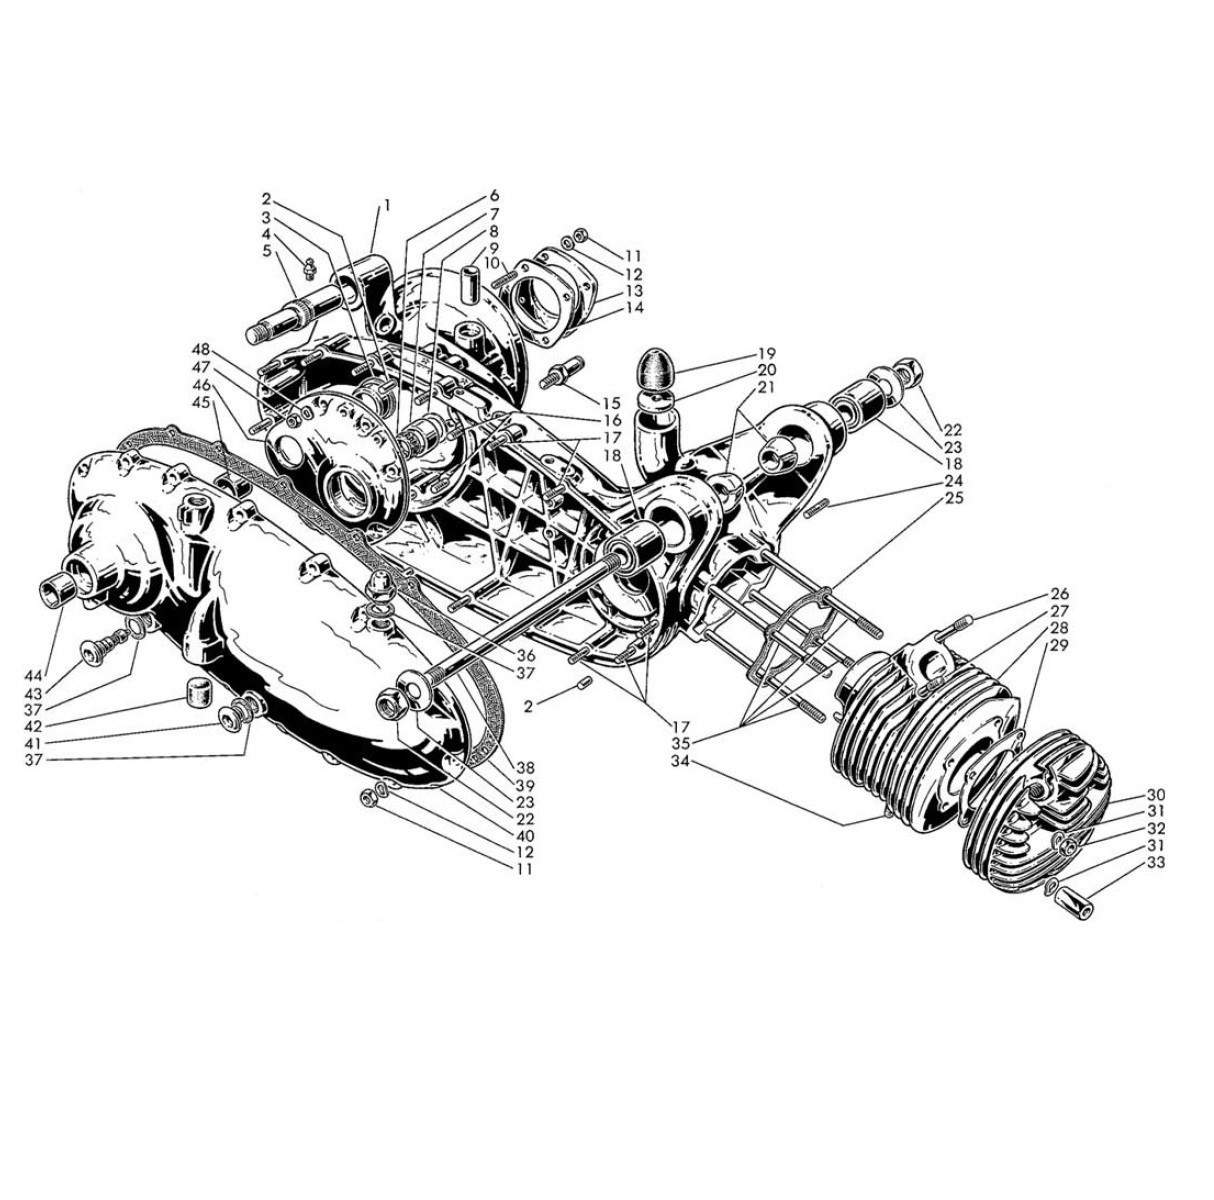 Carter Motore, Cilindro e Testa (Tav.1)